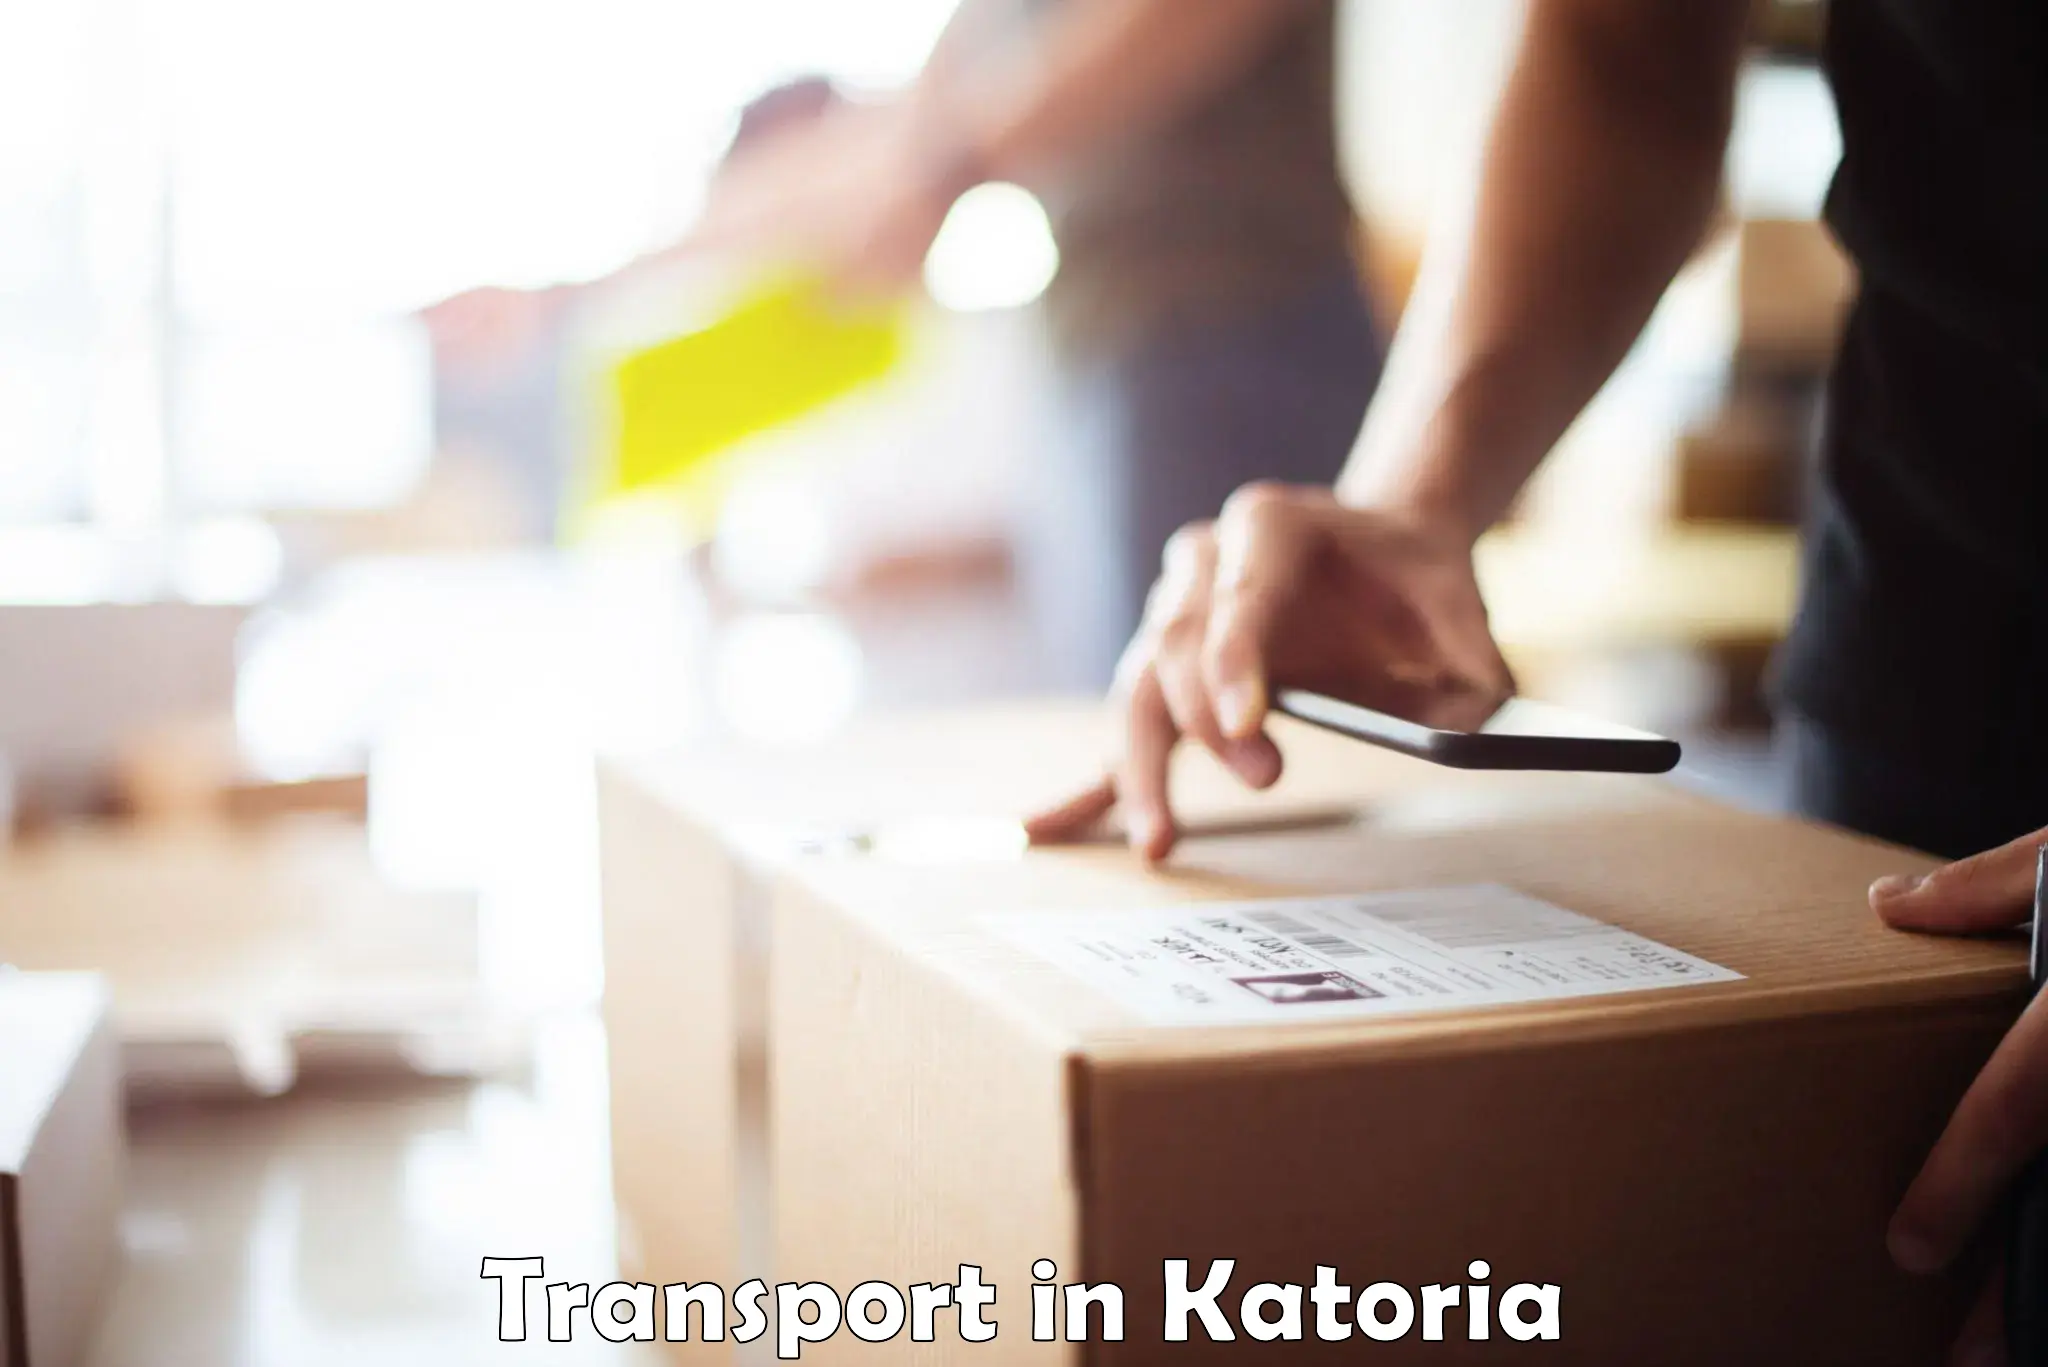 Interstate goods transport in Katoria